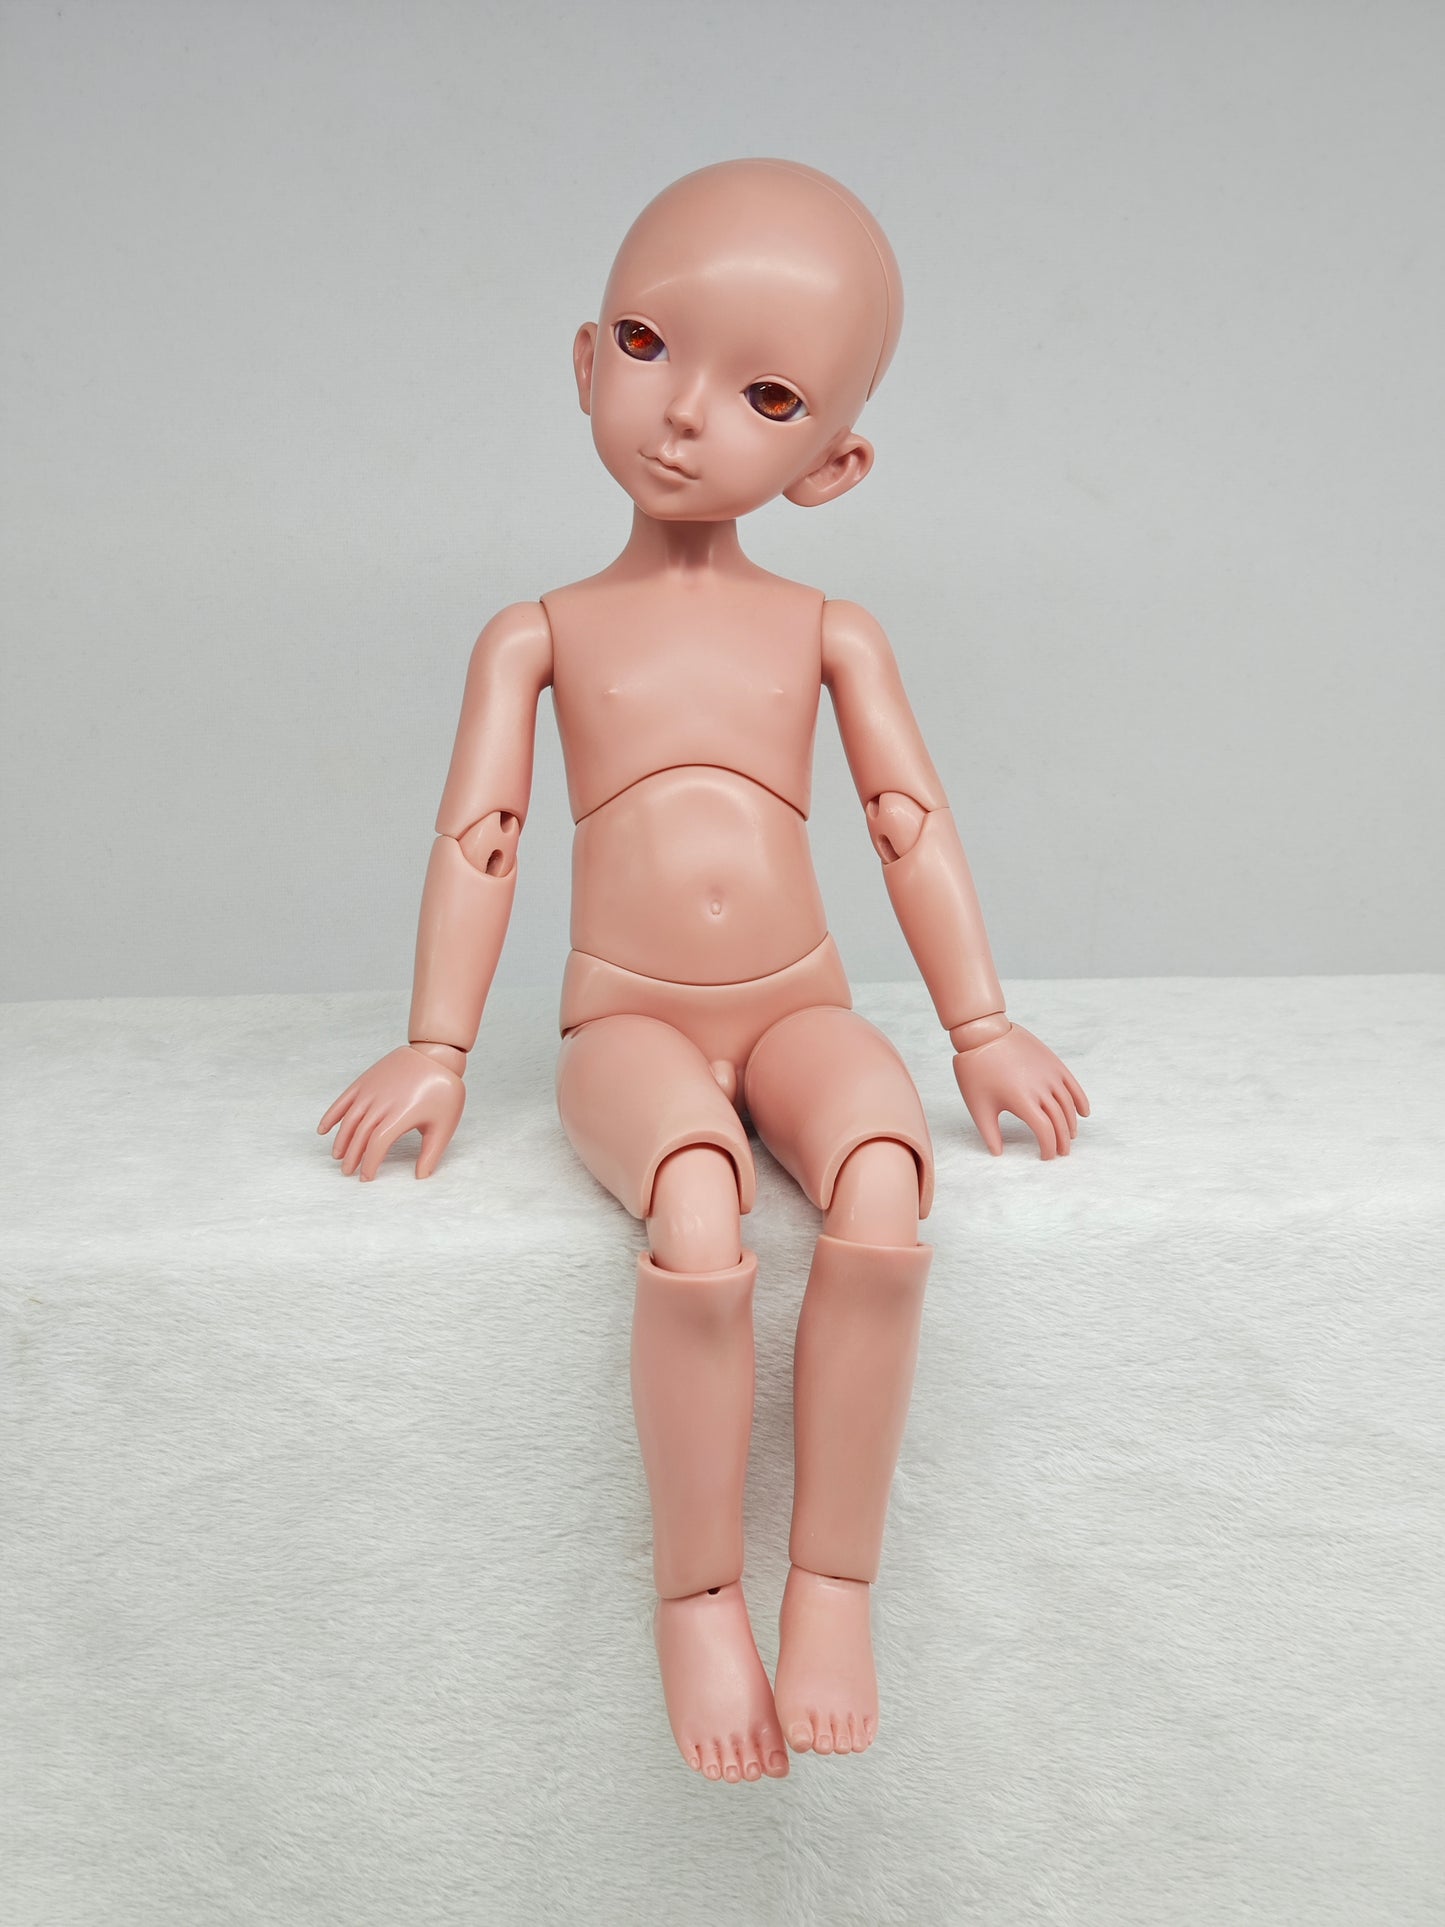 1/6 30cm boy doll Mars in red skin